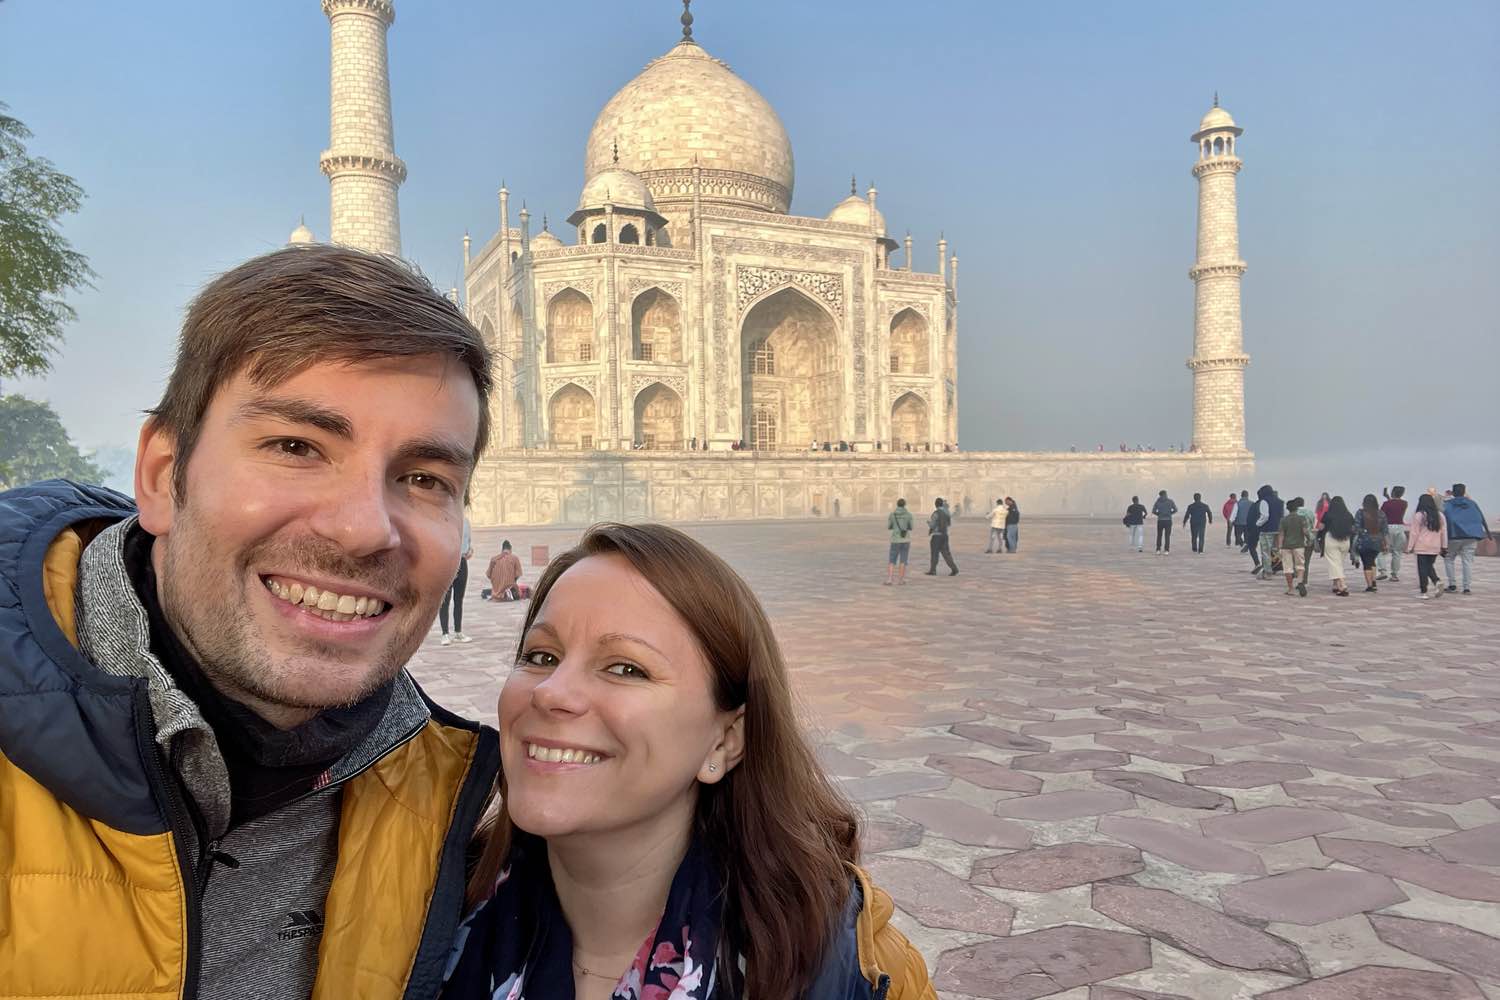 Matt and Jade standing in front of the Taj Mahal in Agra, India